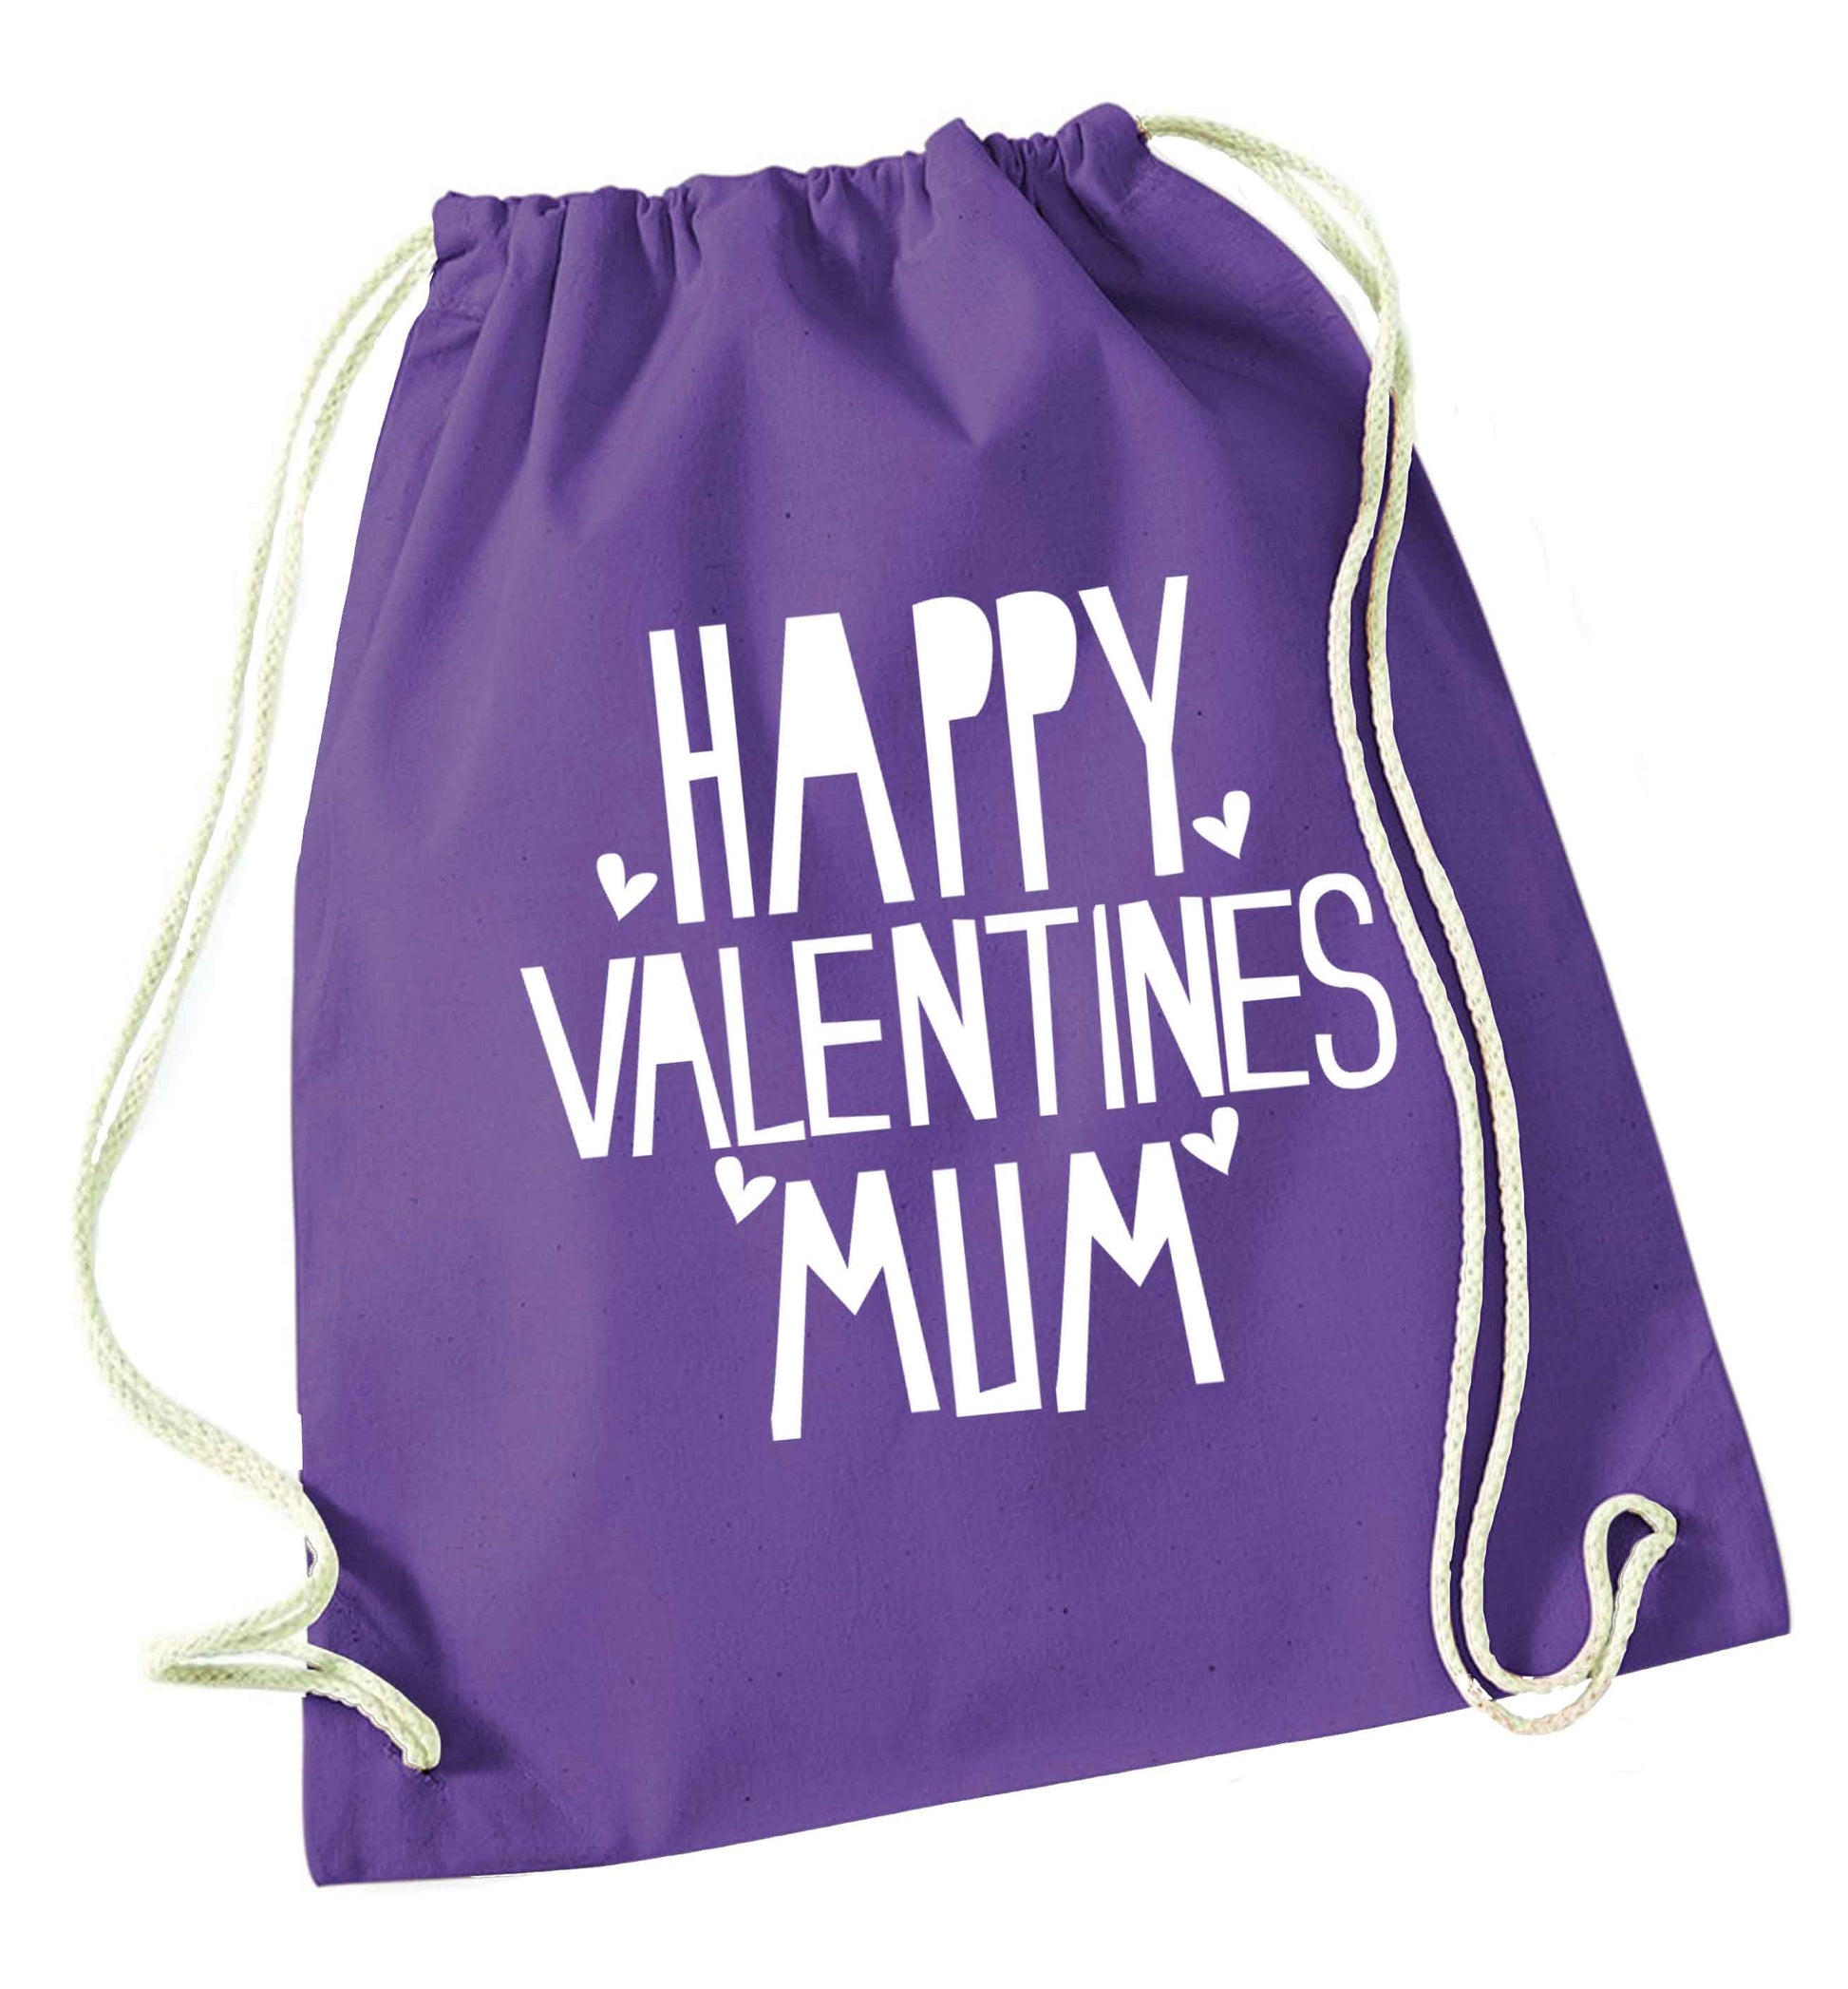 Happy valentines mum purple drawstring bag